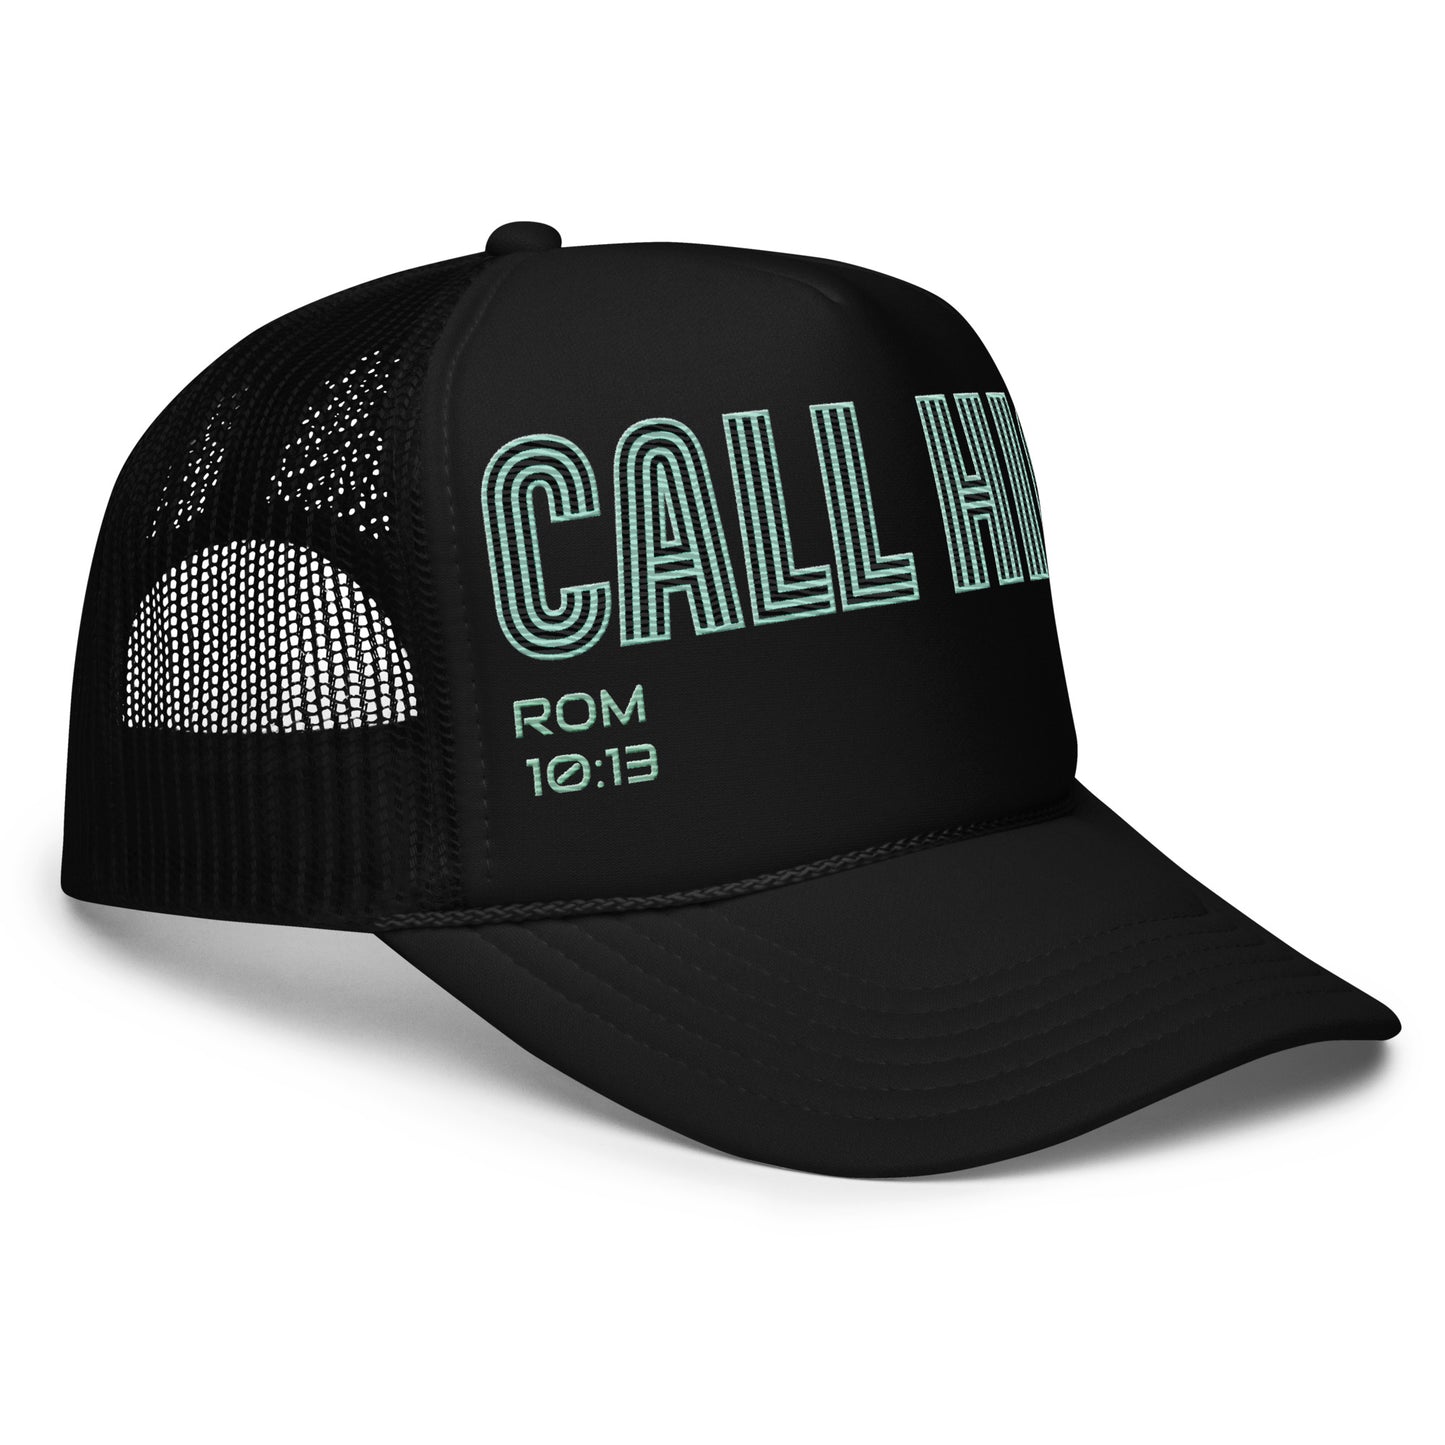 CALL HIM- Foam trucker hat